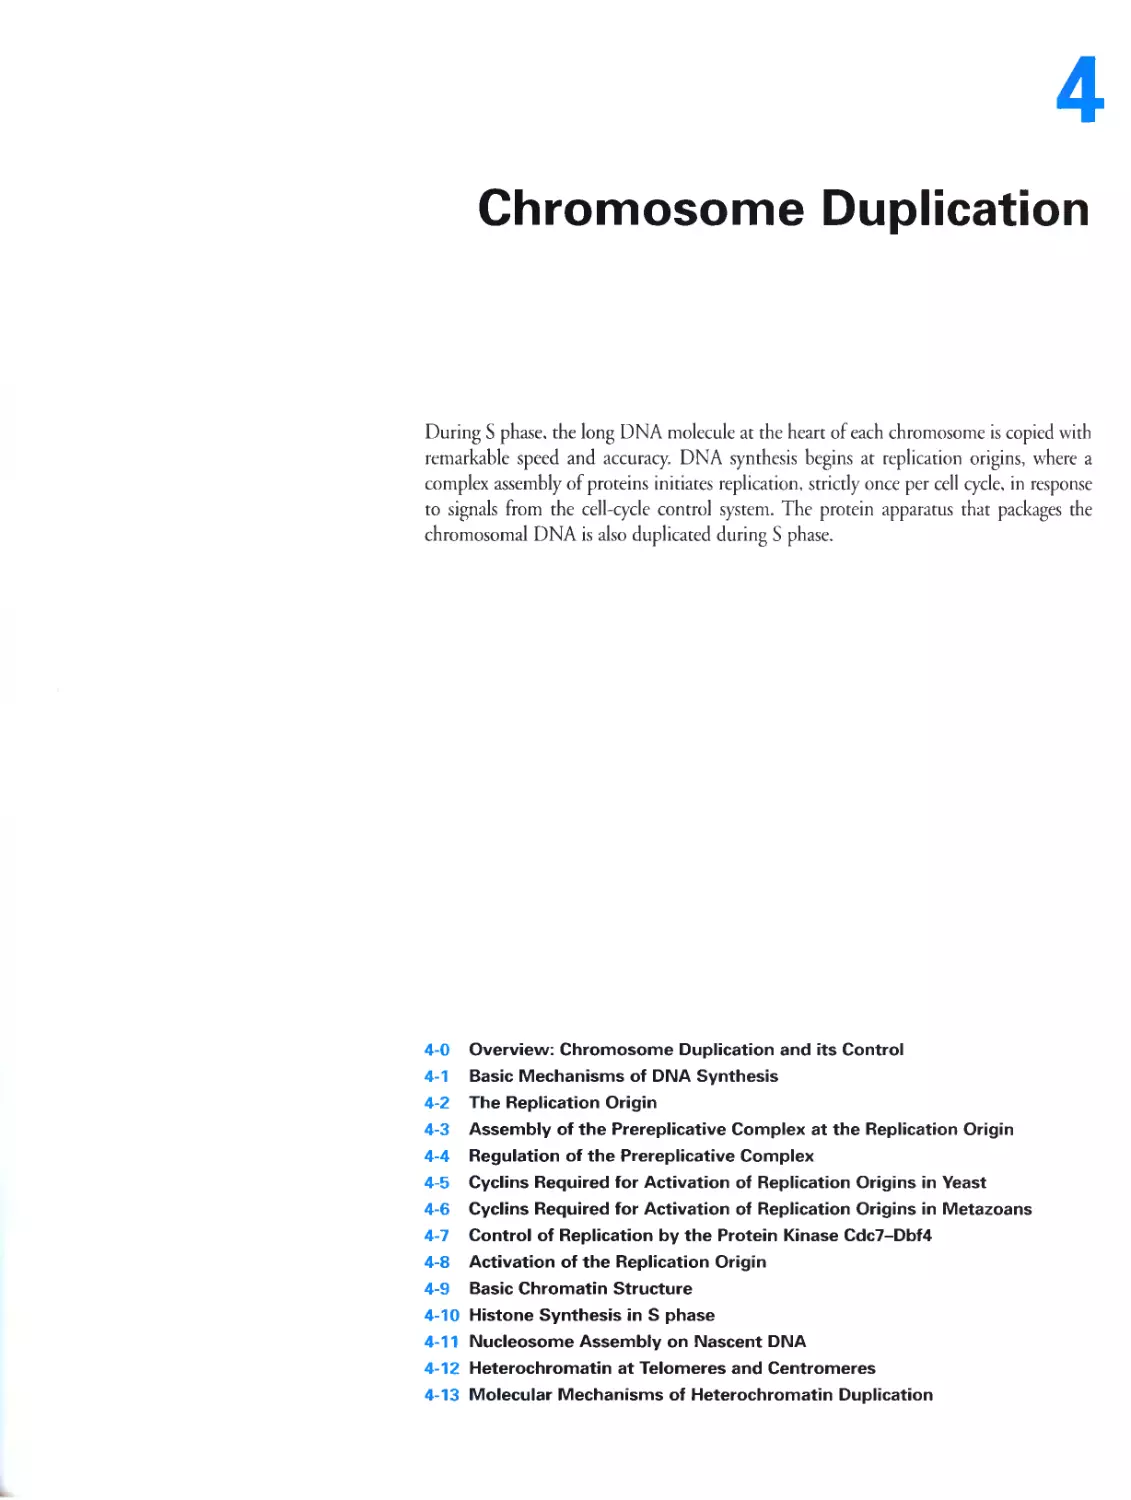 Chapter 4. Chromosome Duplication